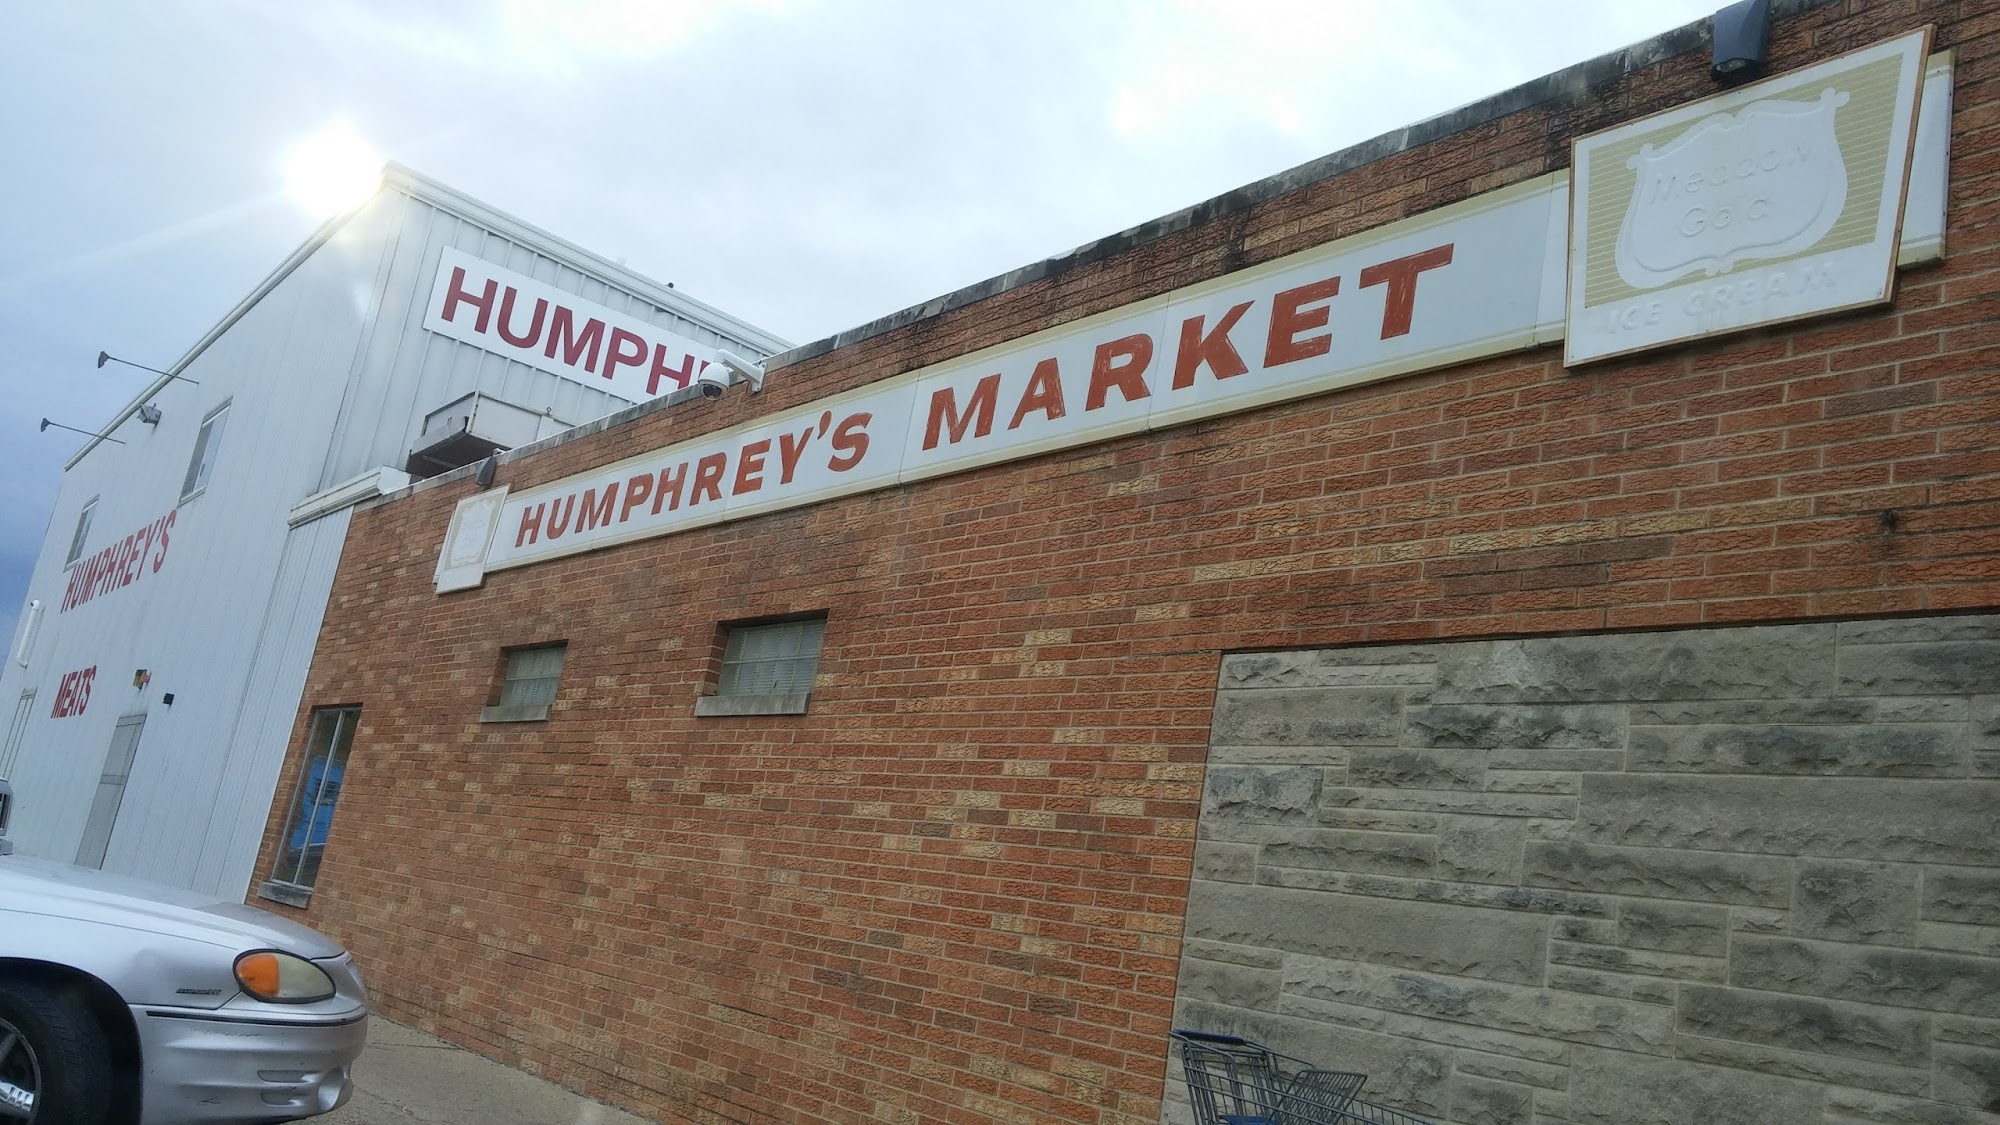 Humphrey's Market